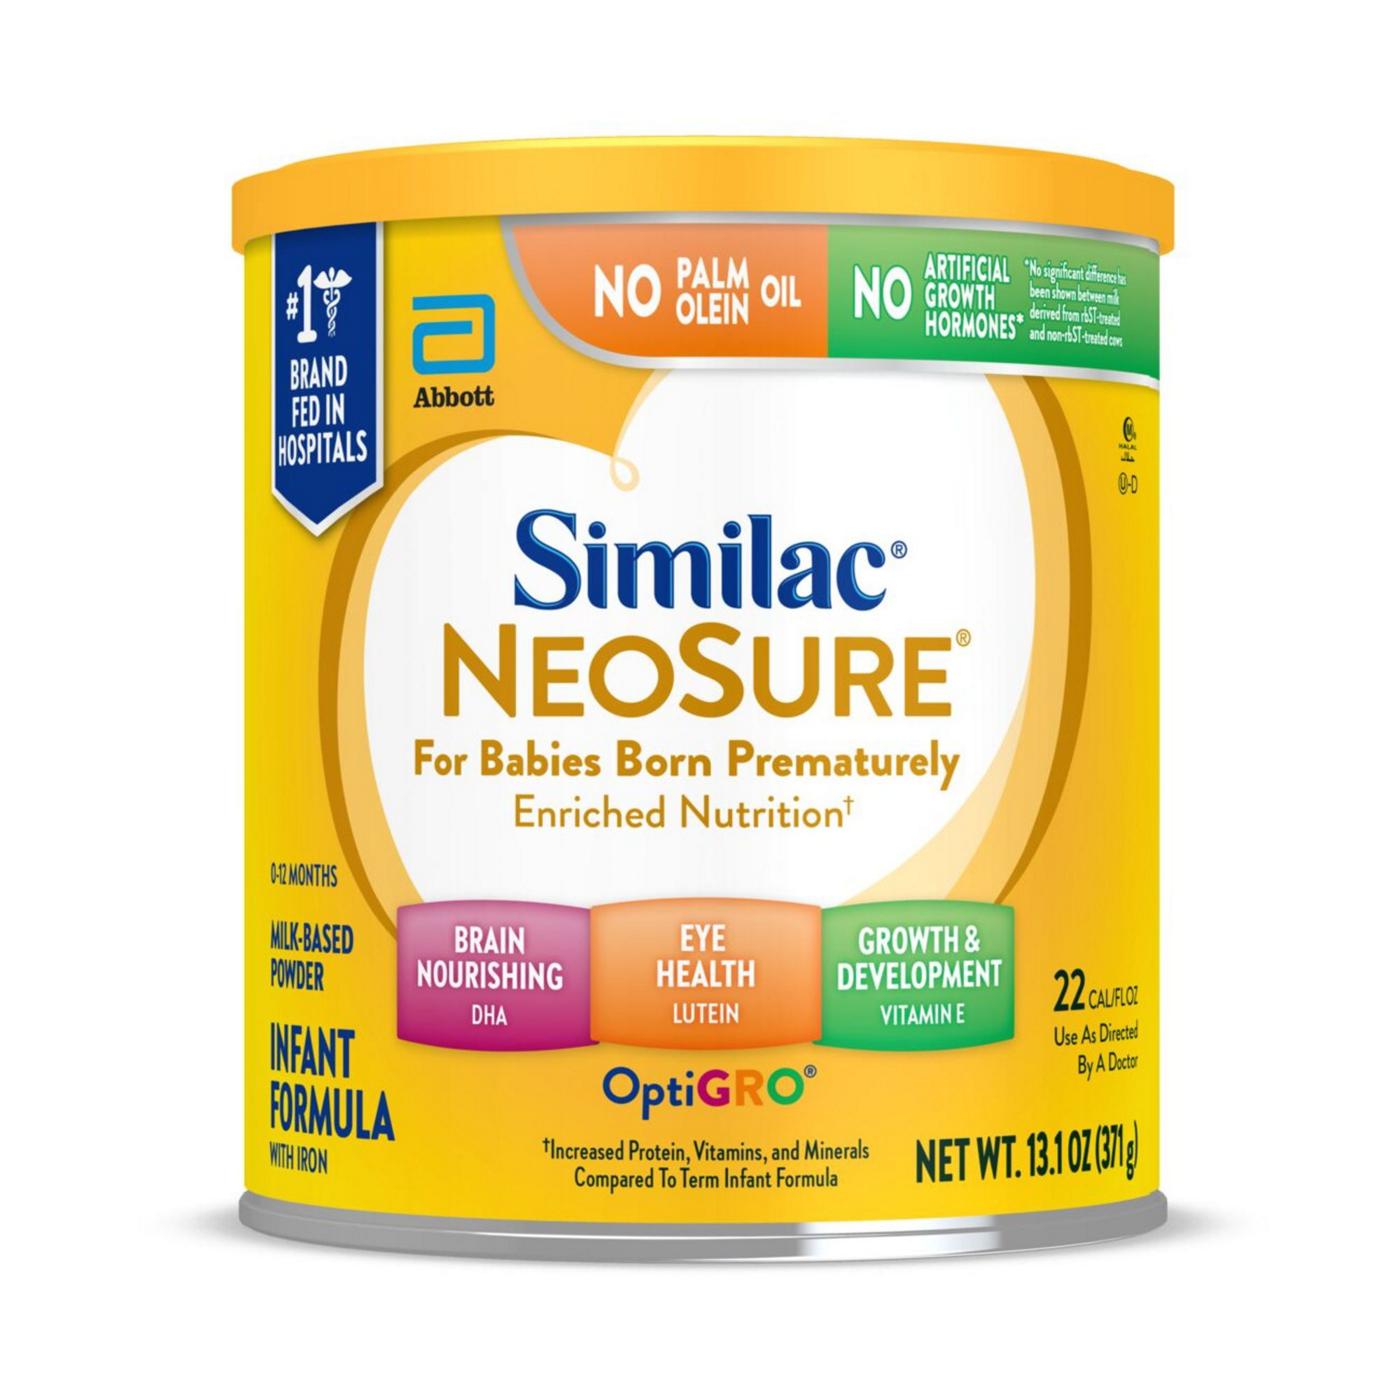 Similac NeoSure Milk-Based Powder Premature Infant Formula; image 1 of 12